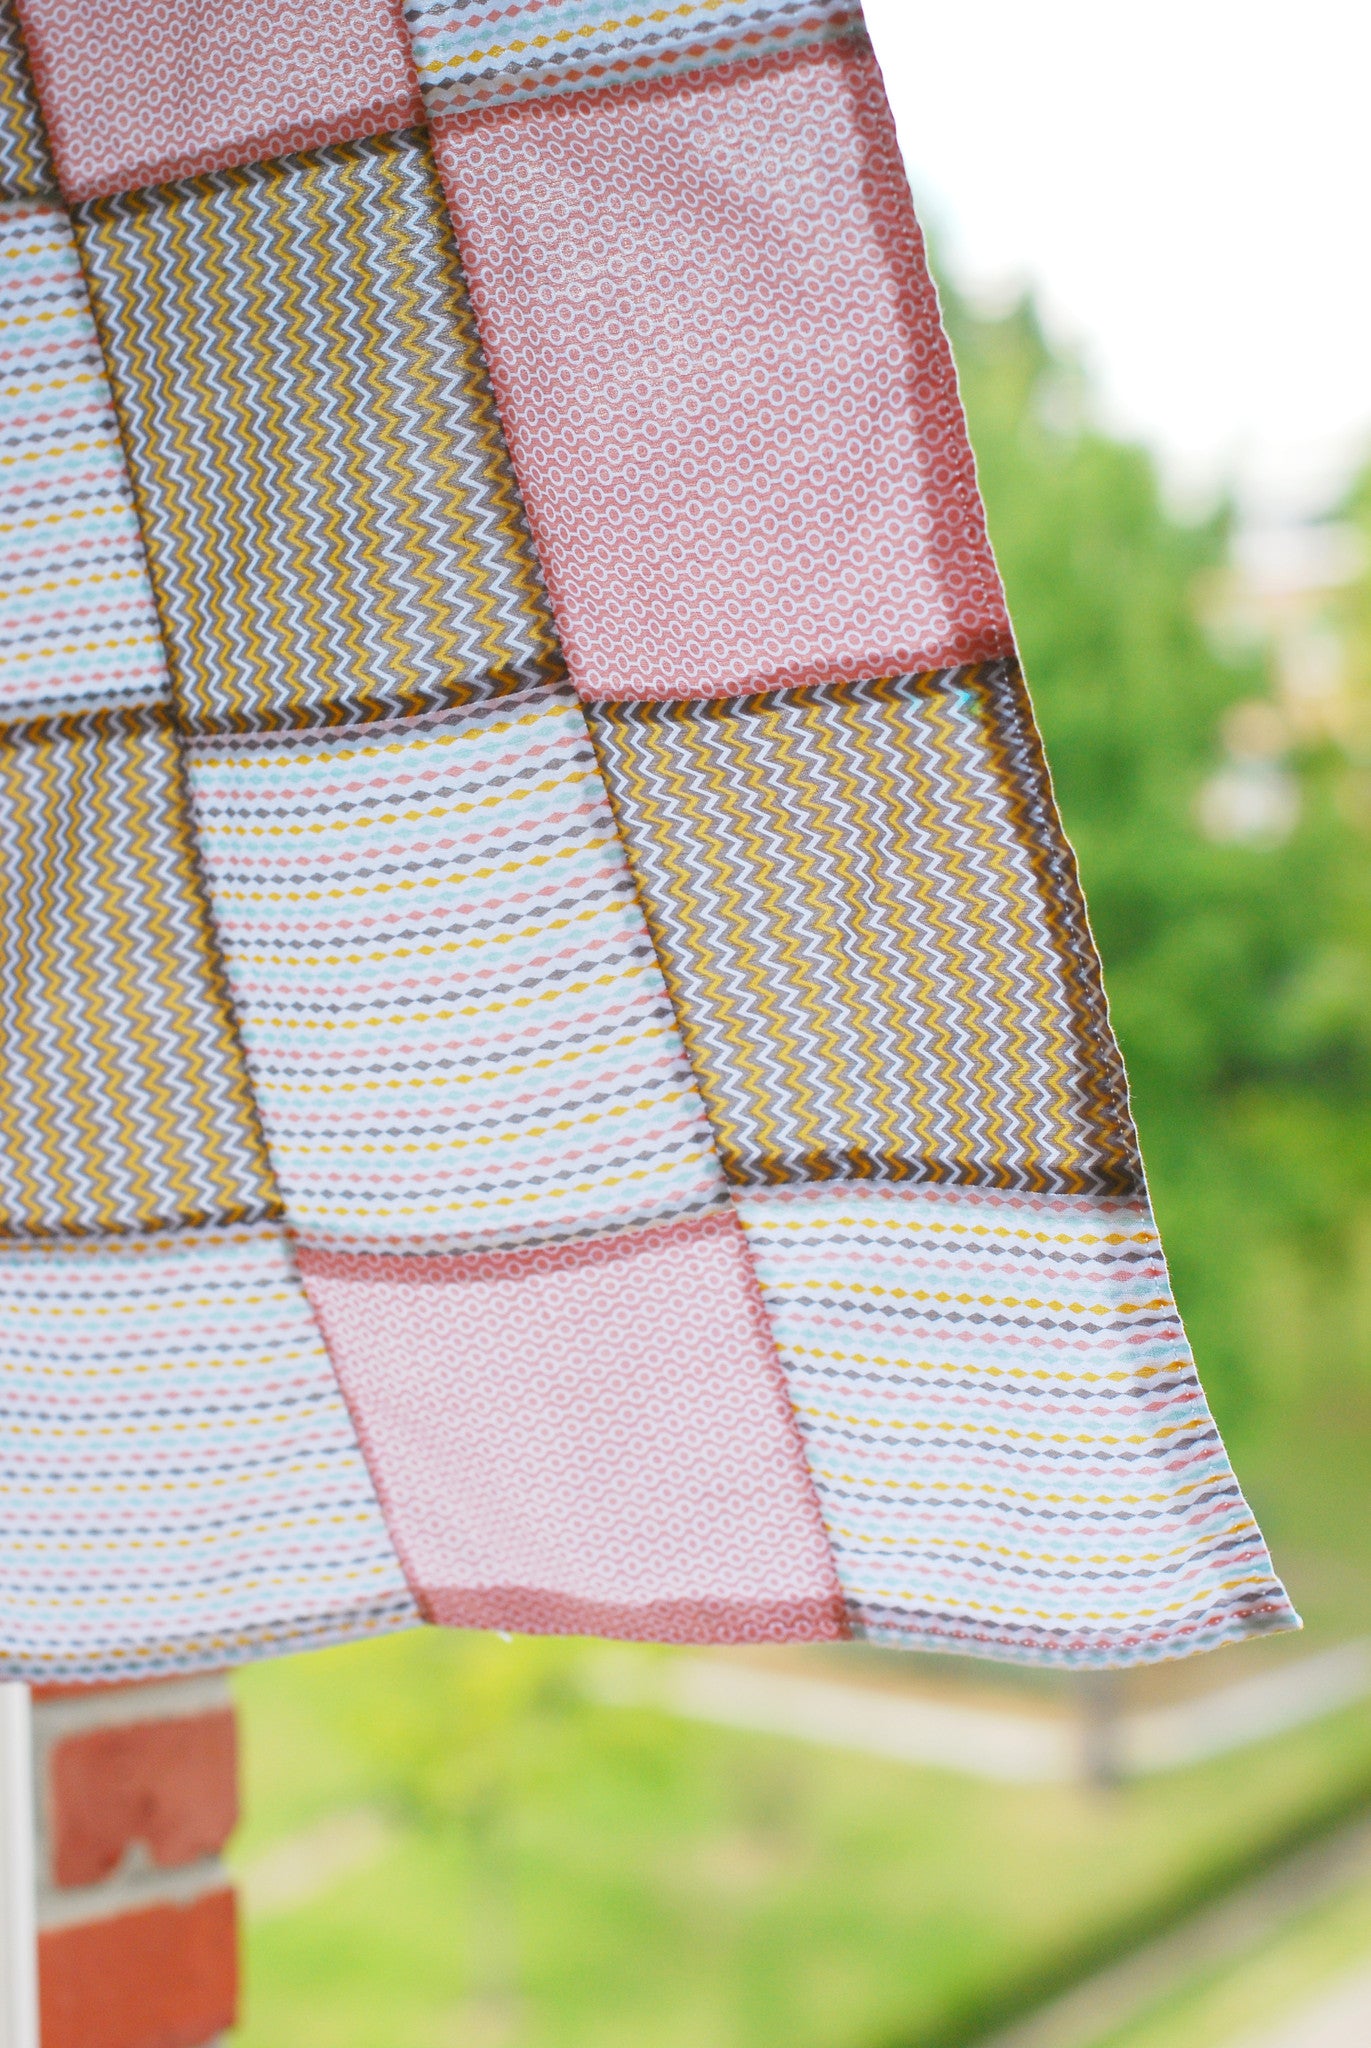 Quarter Fabric Pack - Cotton, Dailylike "Street" - KEY Handmade
 - 6